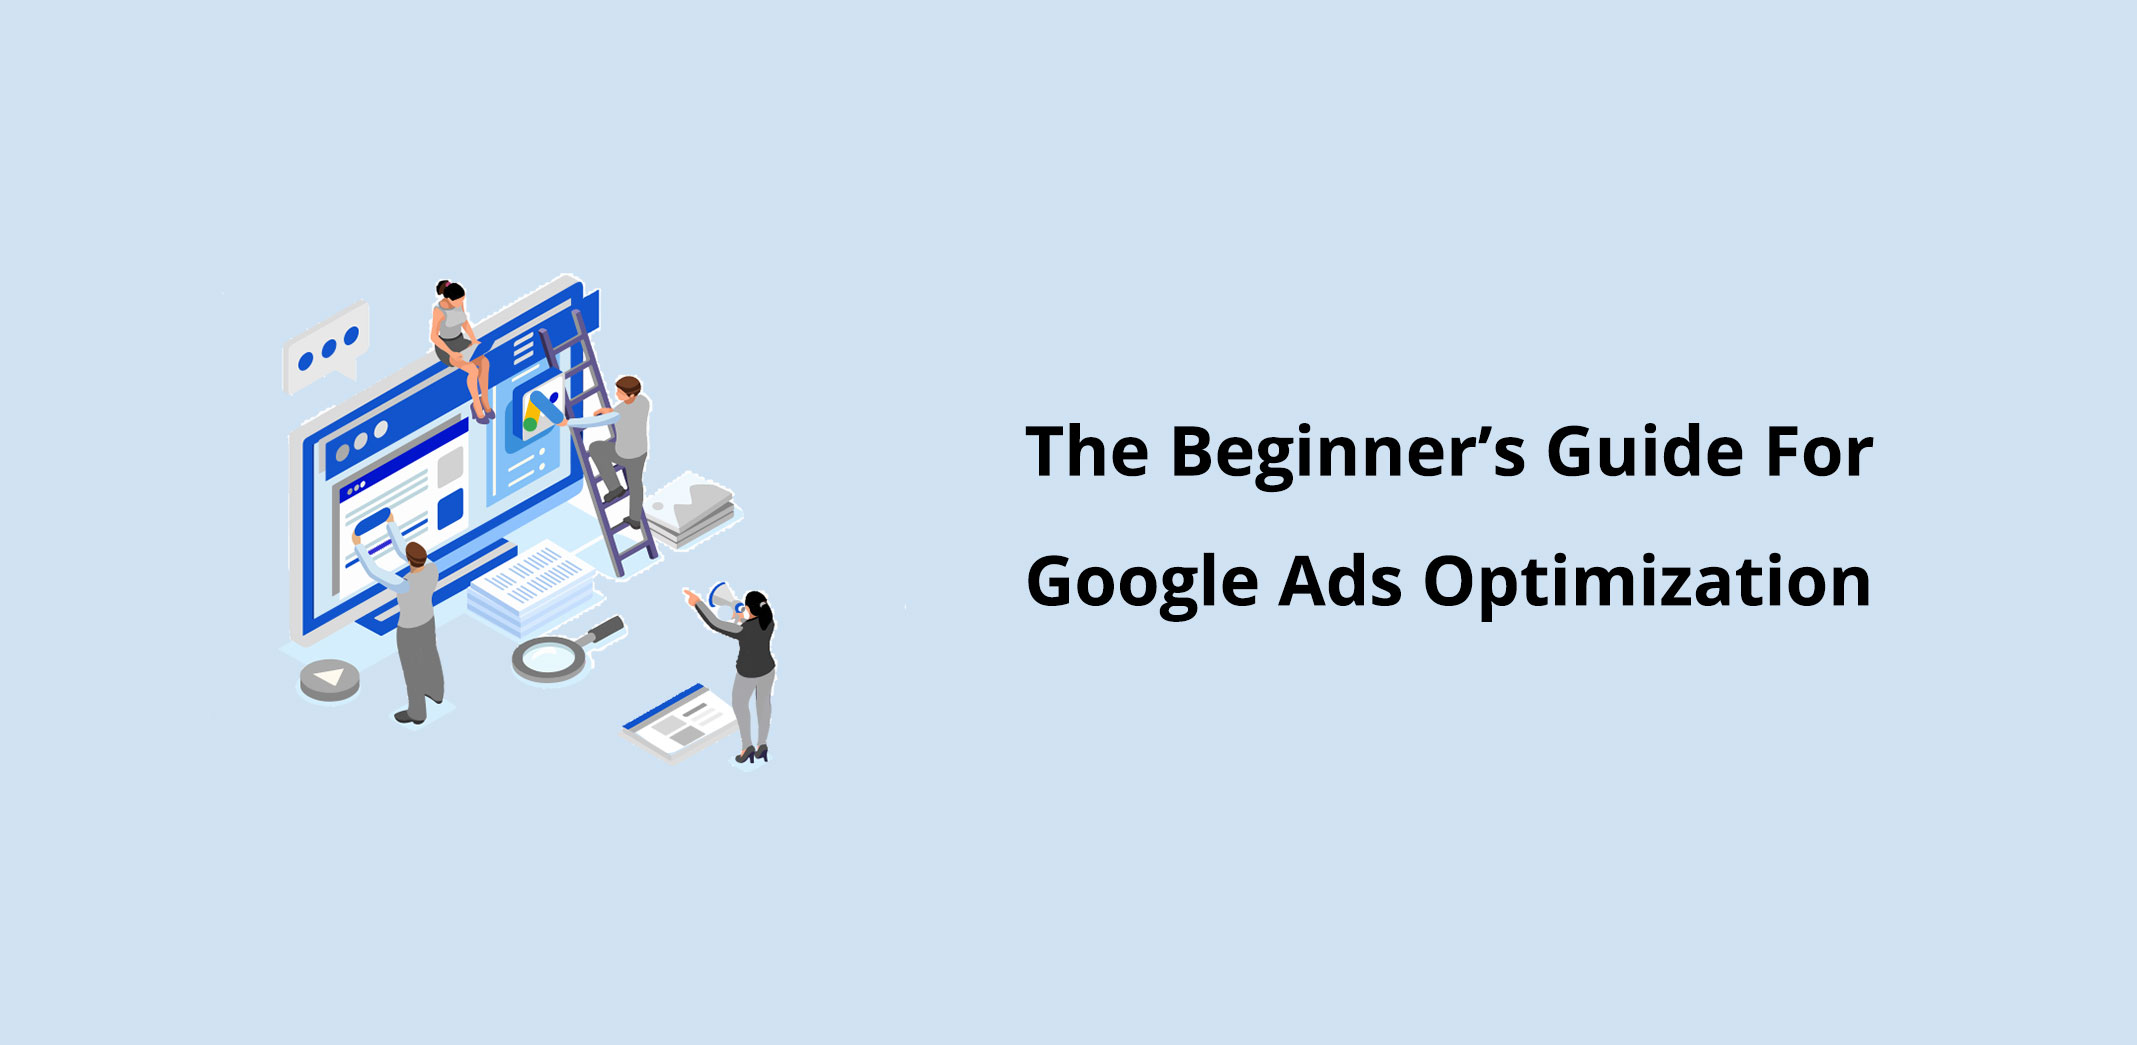 The Beginner’s Guide For Google Ads Optimization